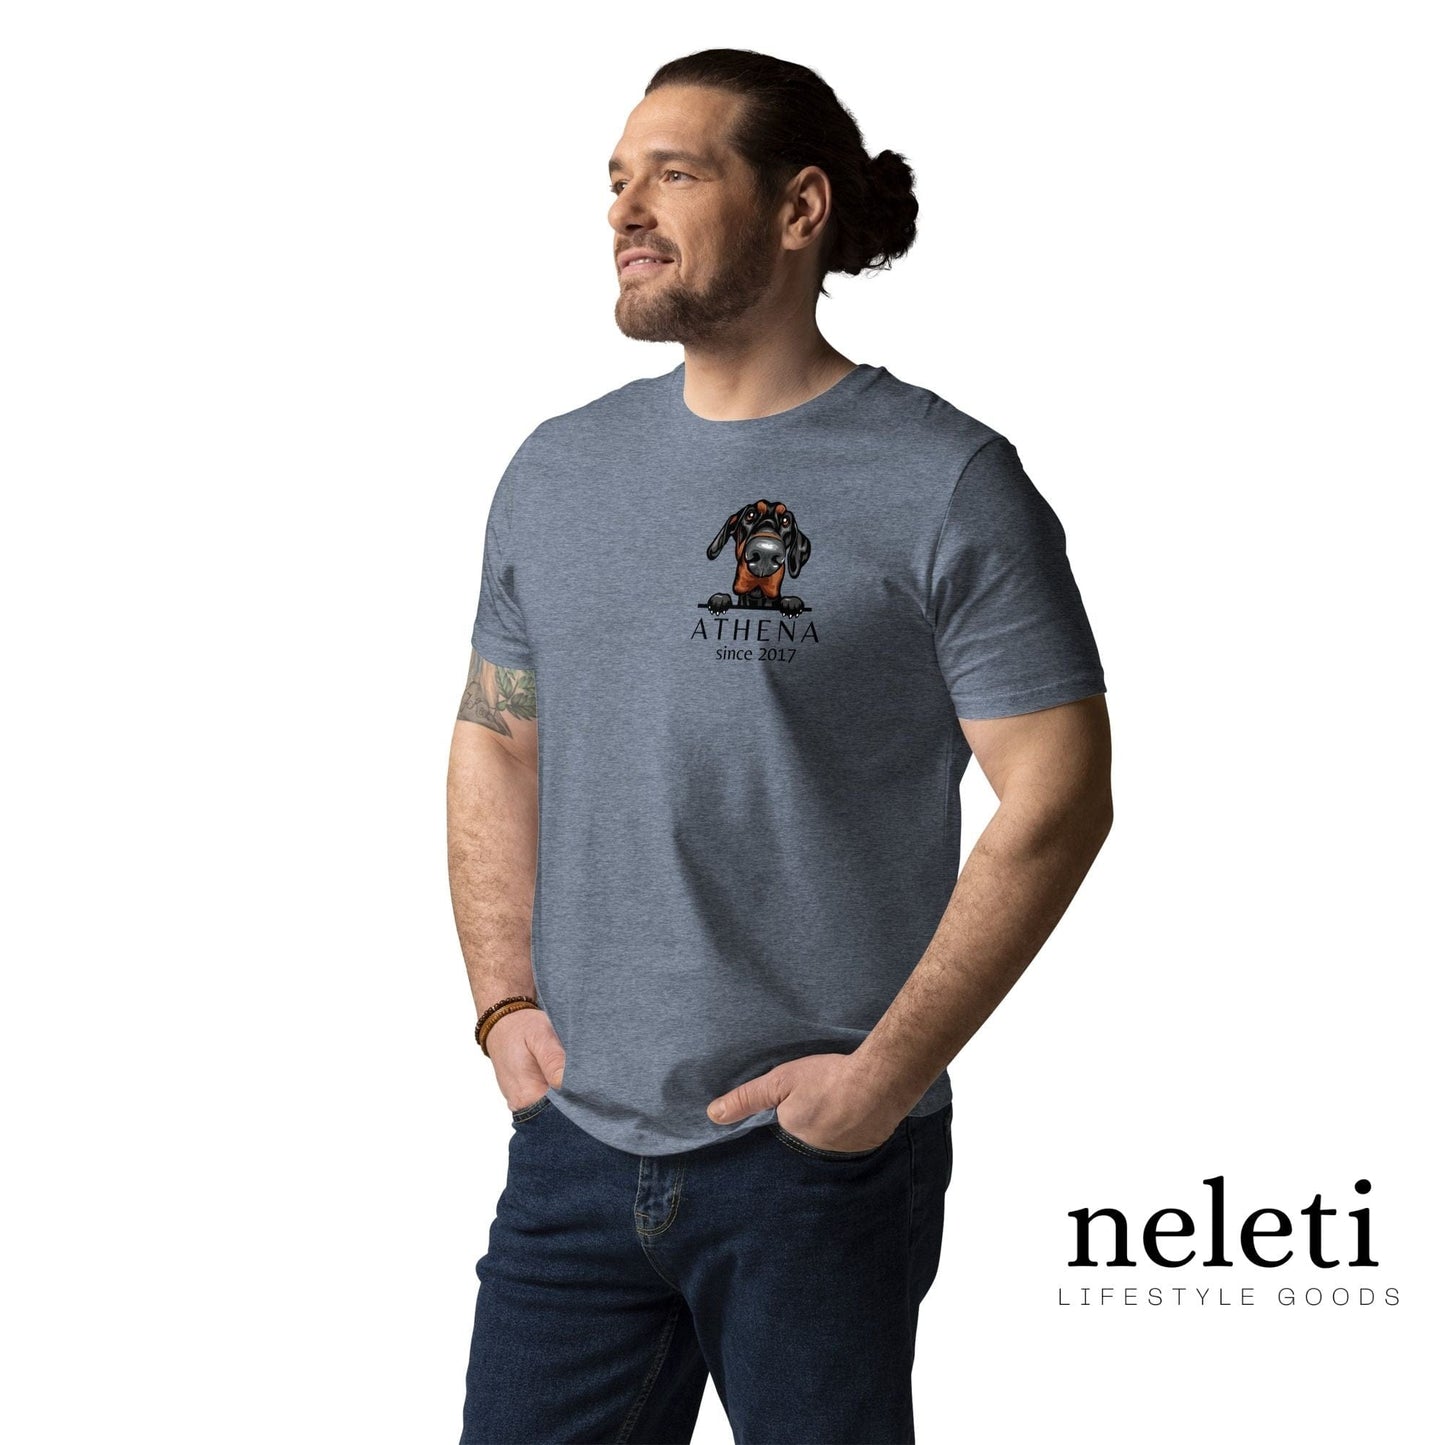 neleti.com-custom-dark-heather-blue-shirt-for-dog-dad